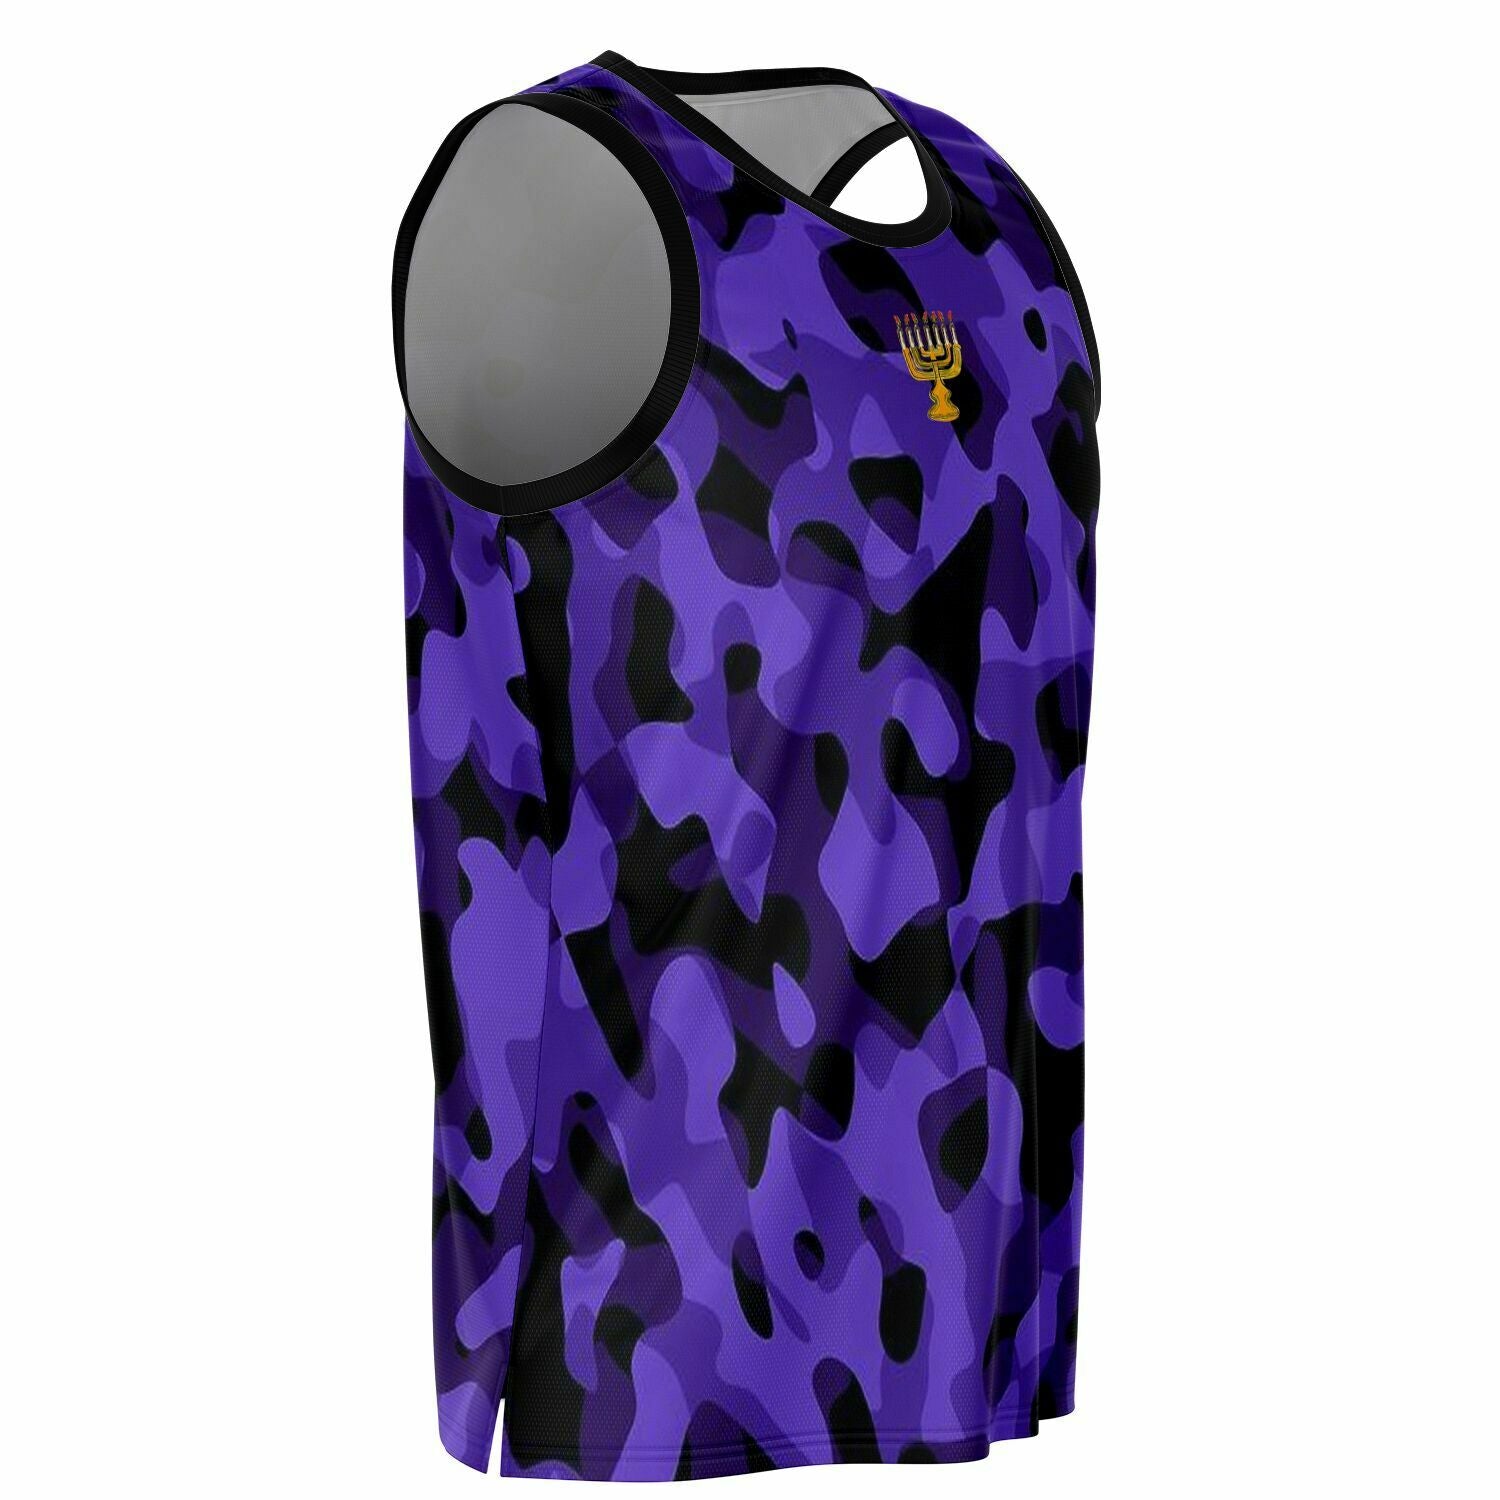 Camo Royal Purple Premium Fit Basketball Jersey